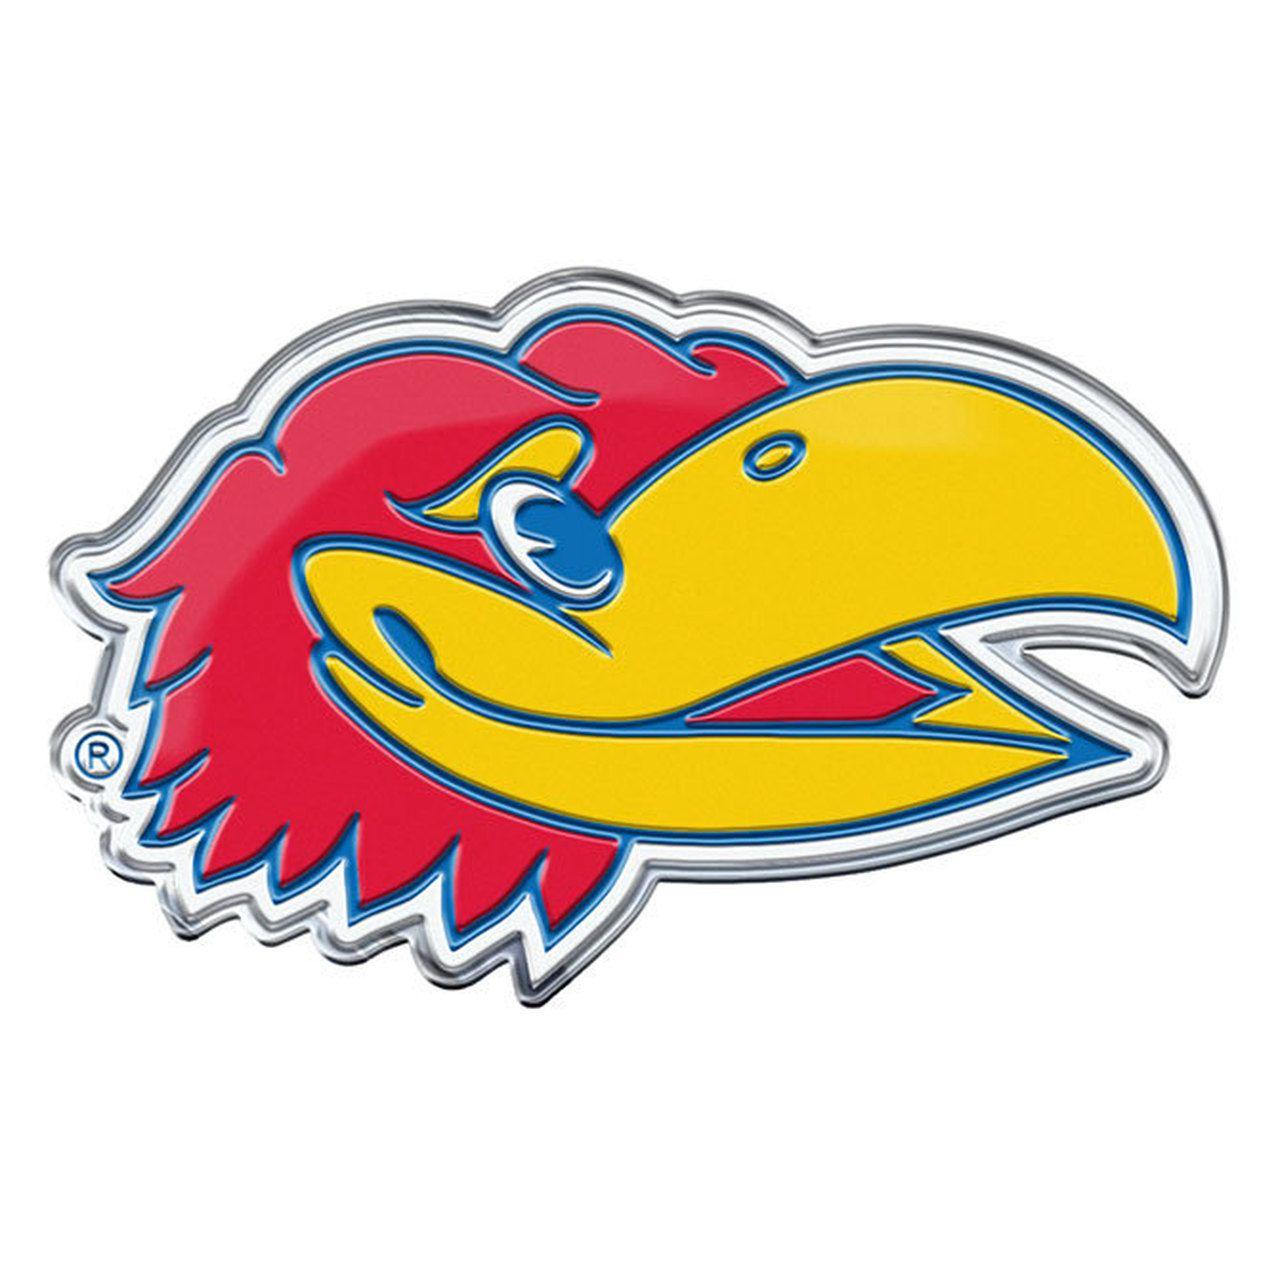 Jayhawks Logo - Kansas Jayhawks Auto Emblem Color Alternate Logo